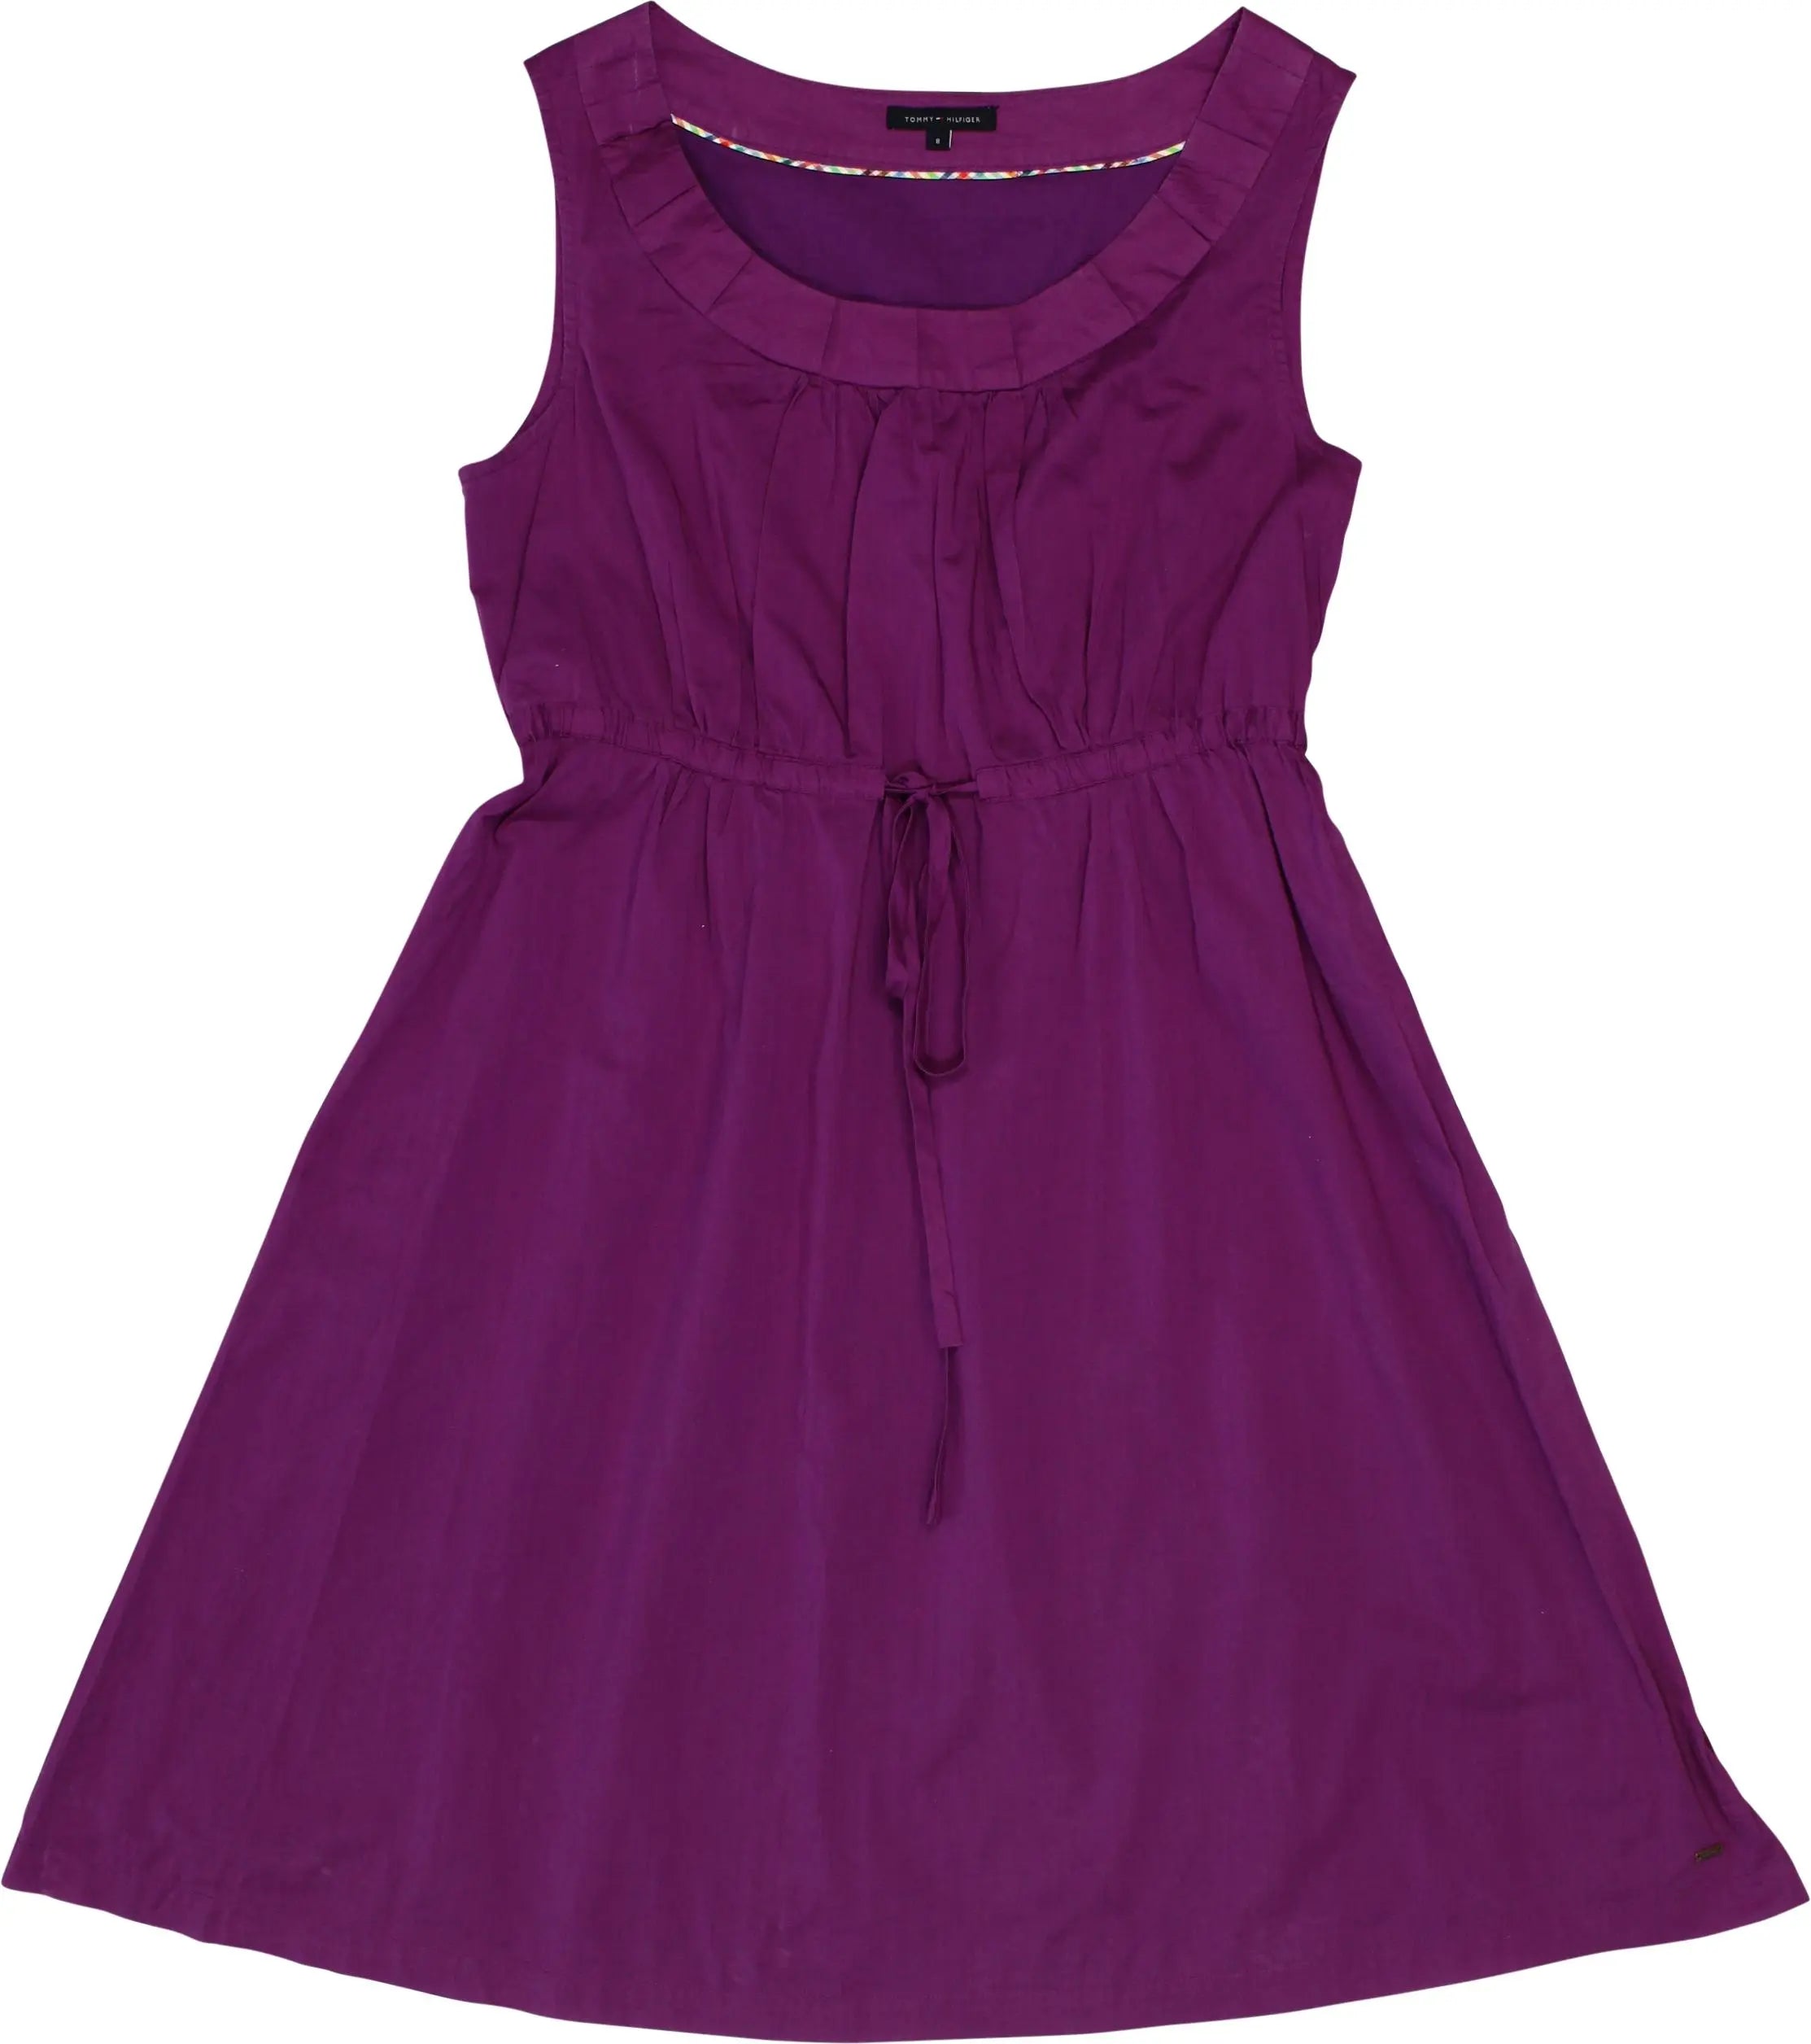 Tommy Hilfiger - Tommy Hilfiger Purple Dress- ThriftTale.com - Vintage and second handclothing